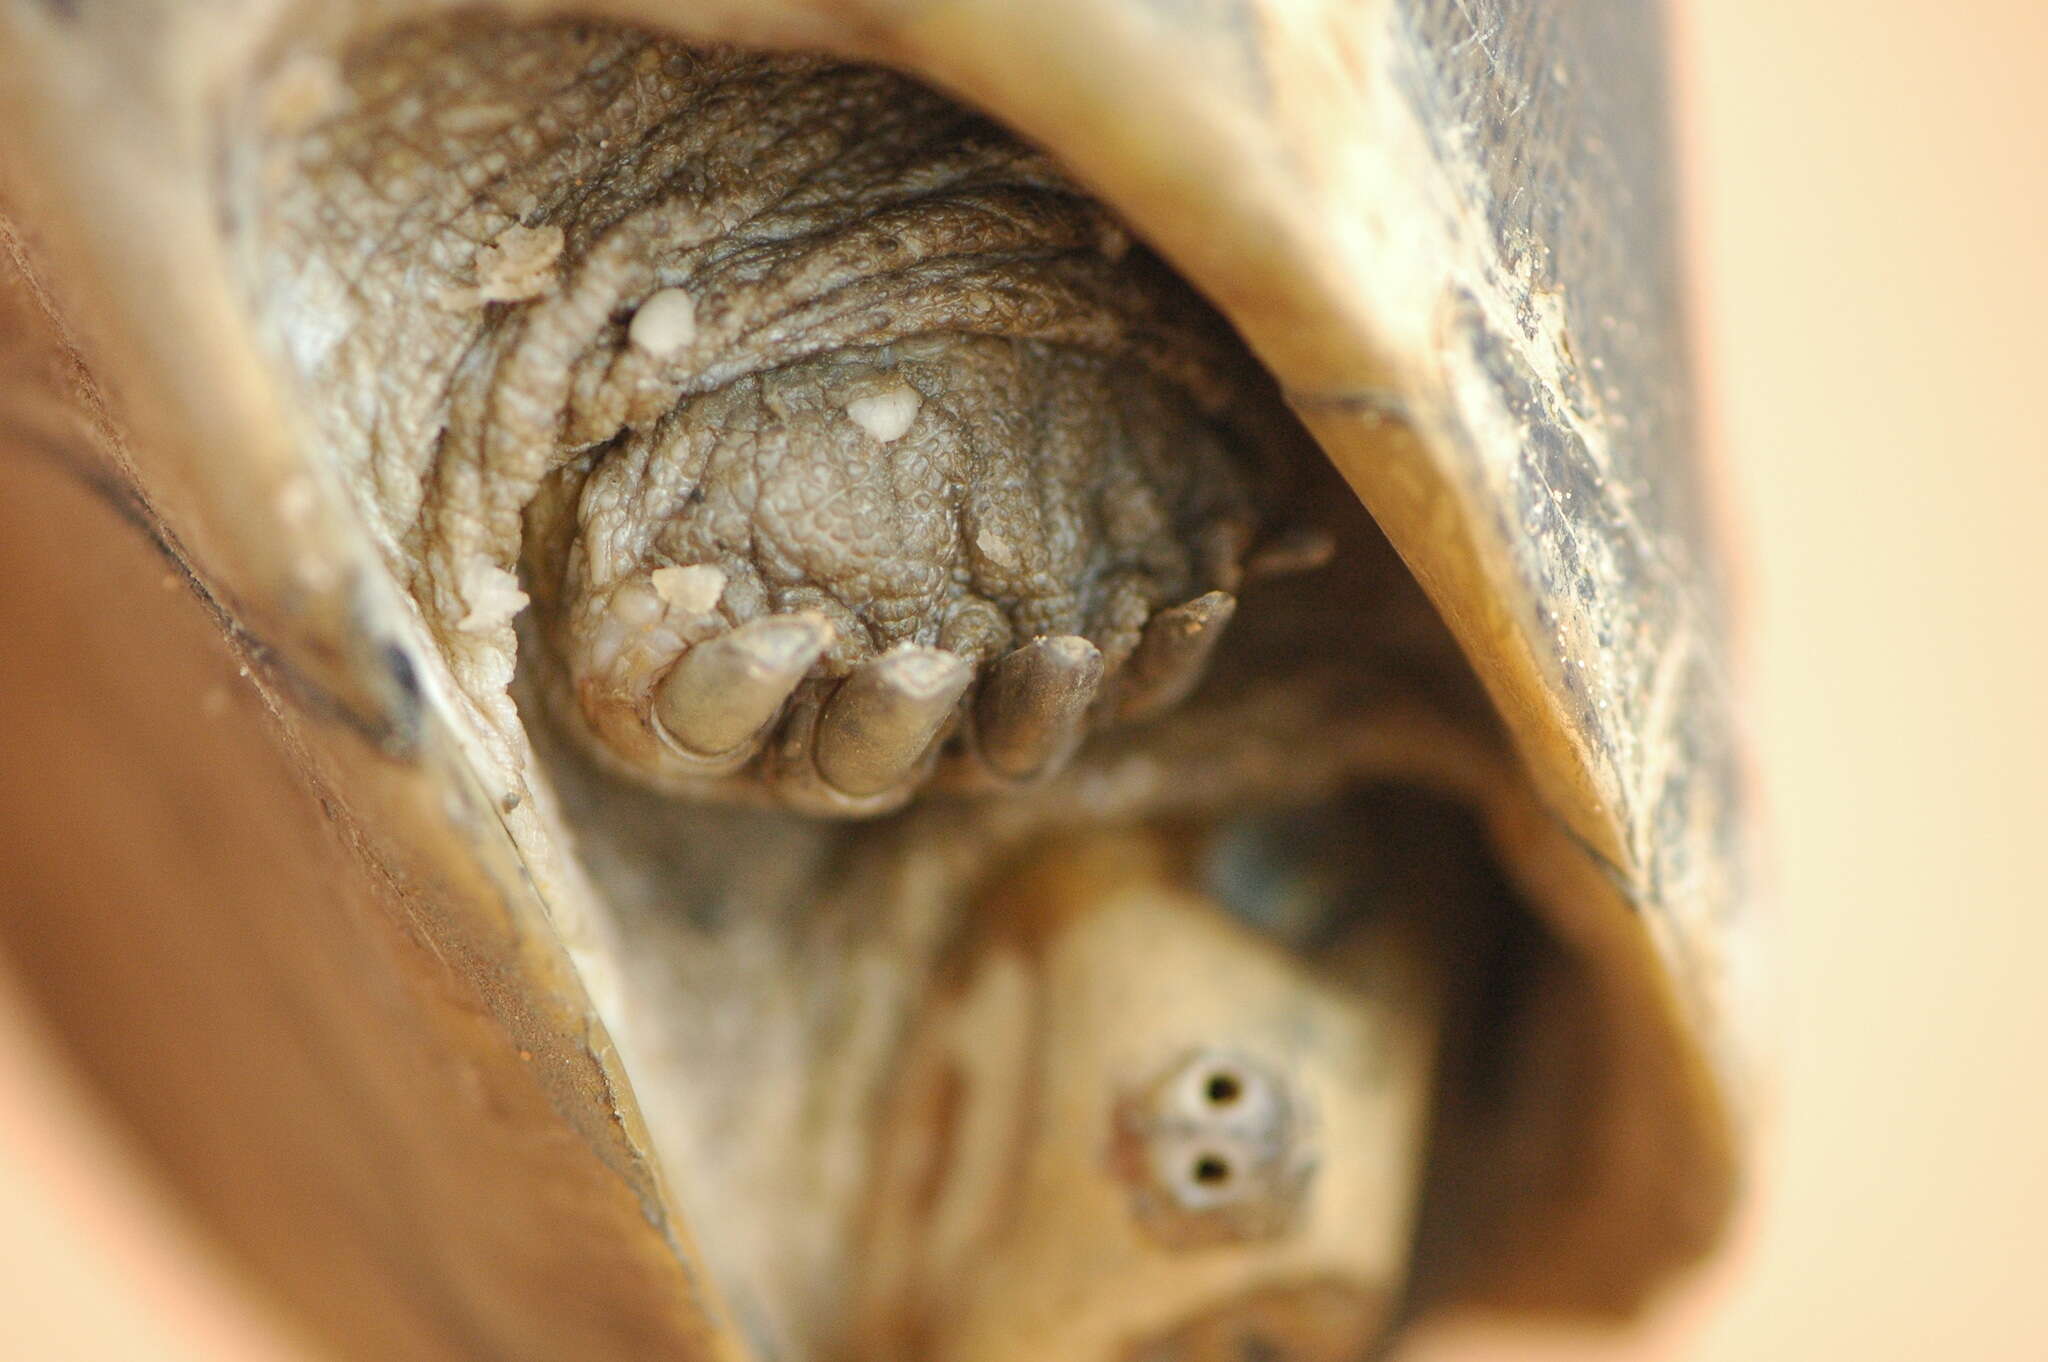 Image of Adanson's mud turtle